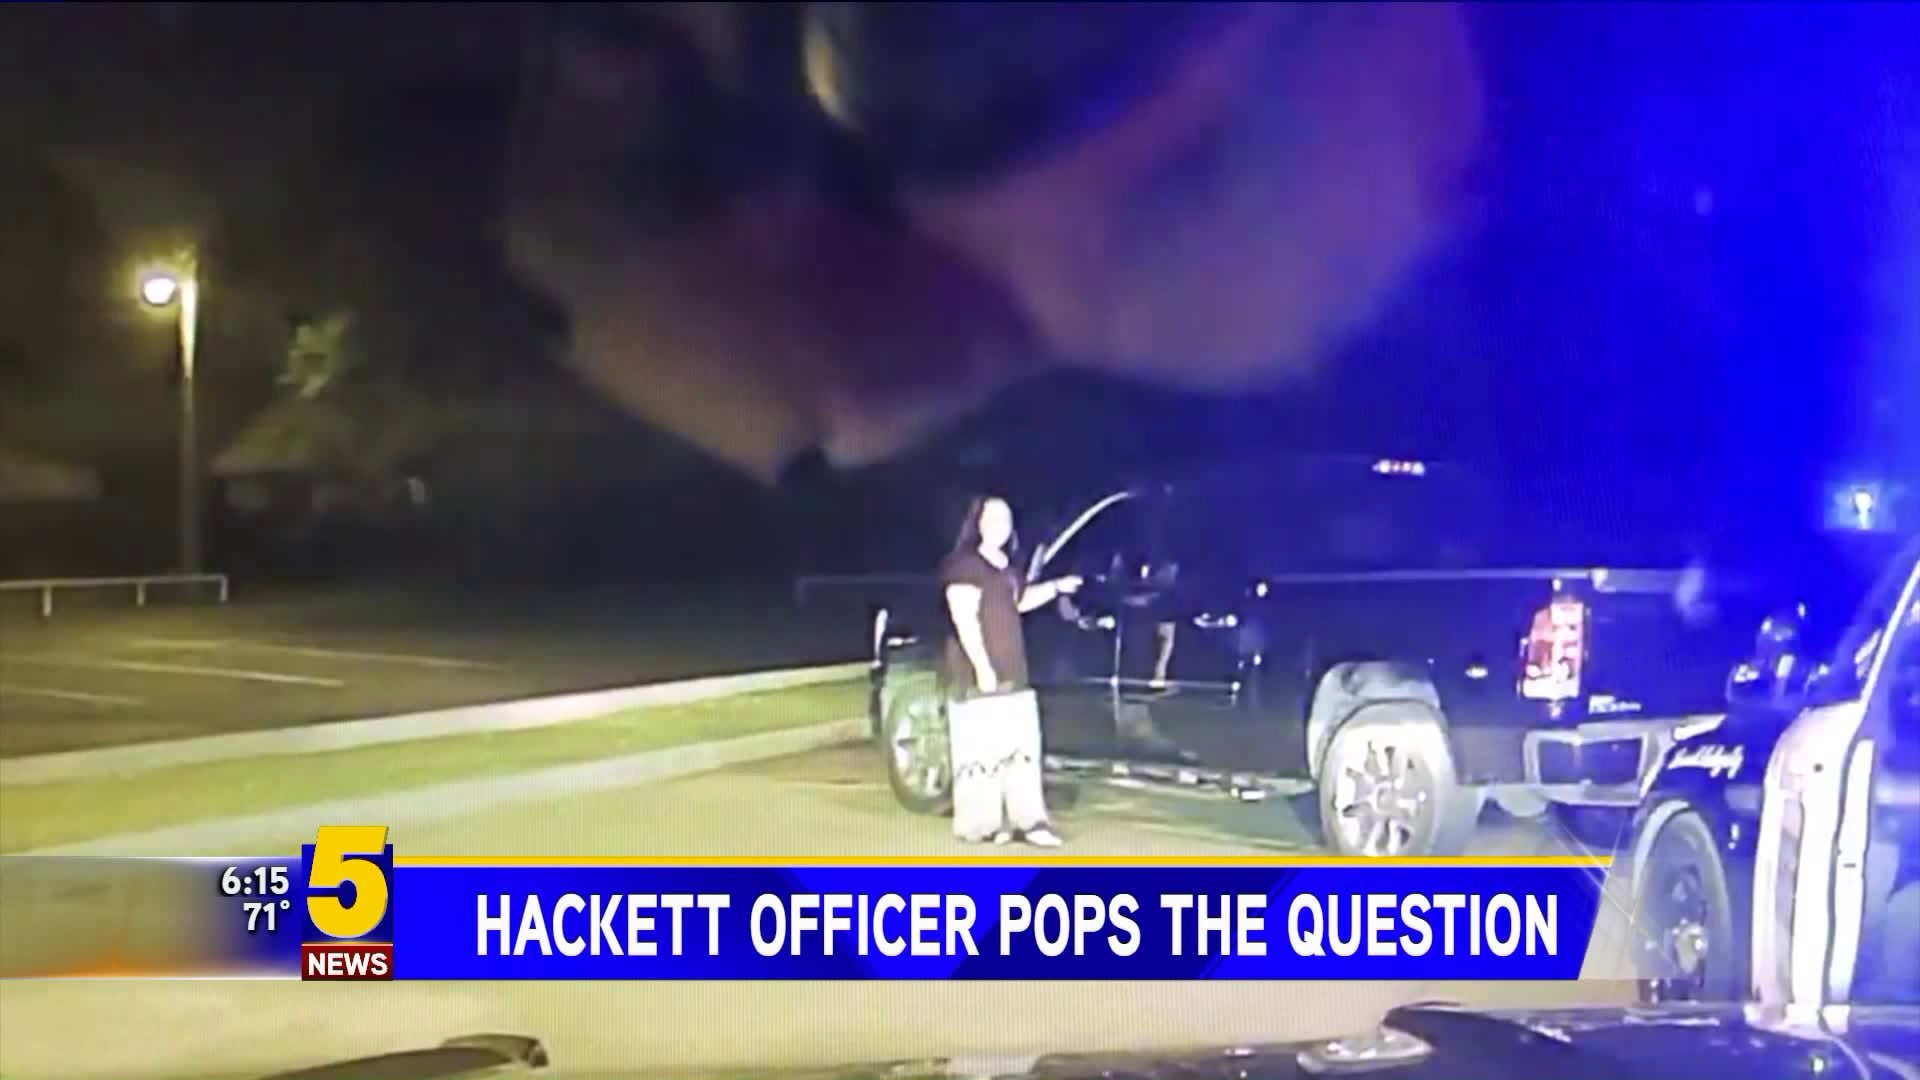 Hackett Officer Pops the Question